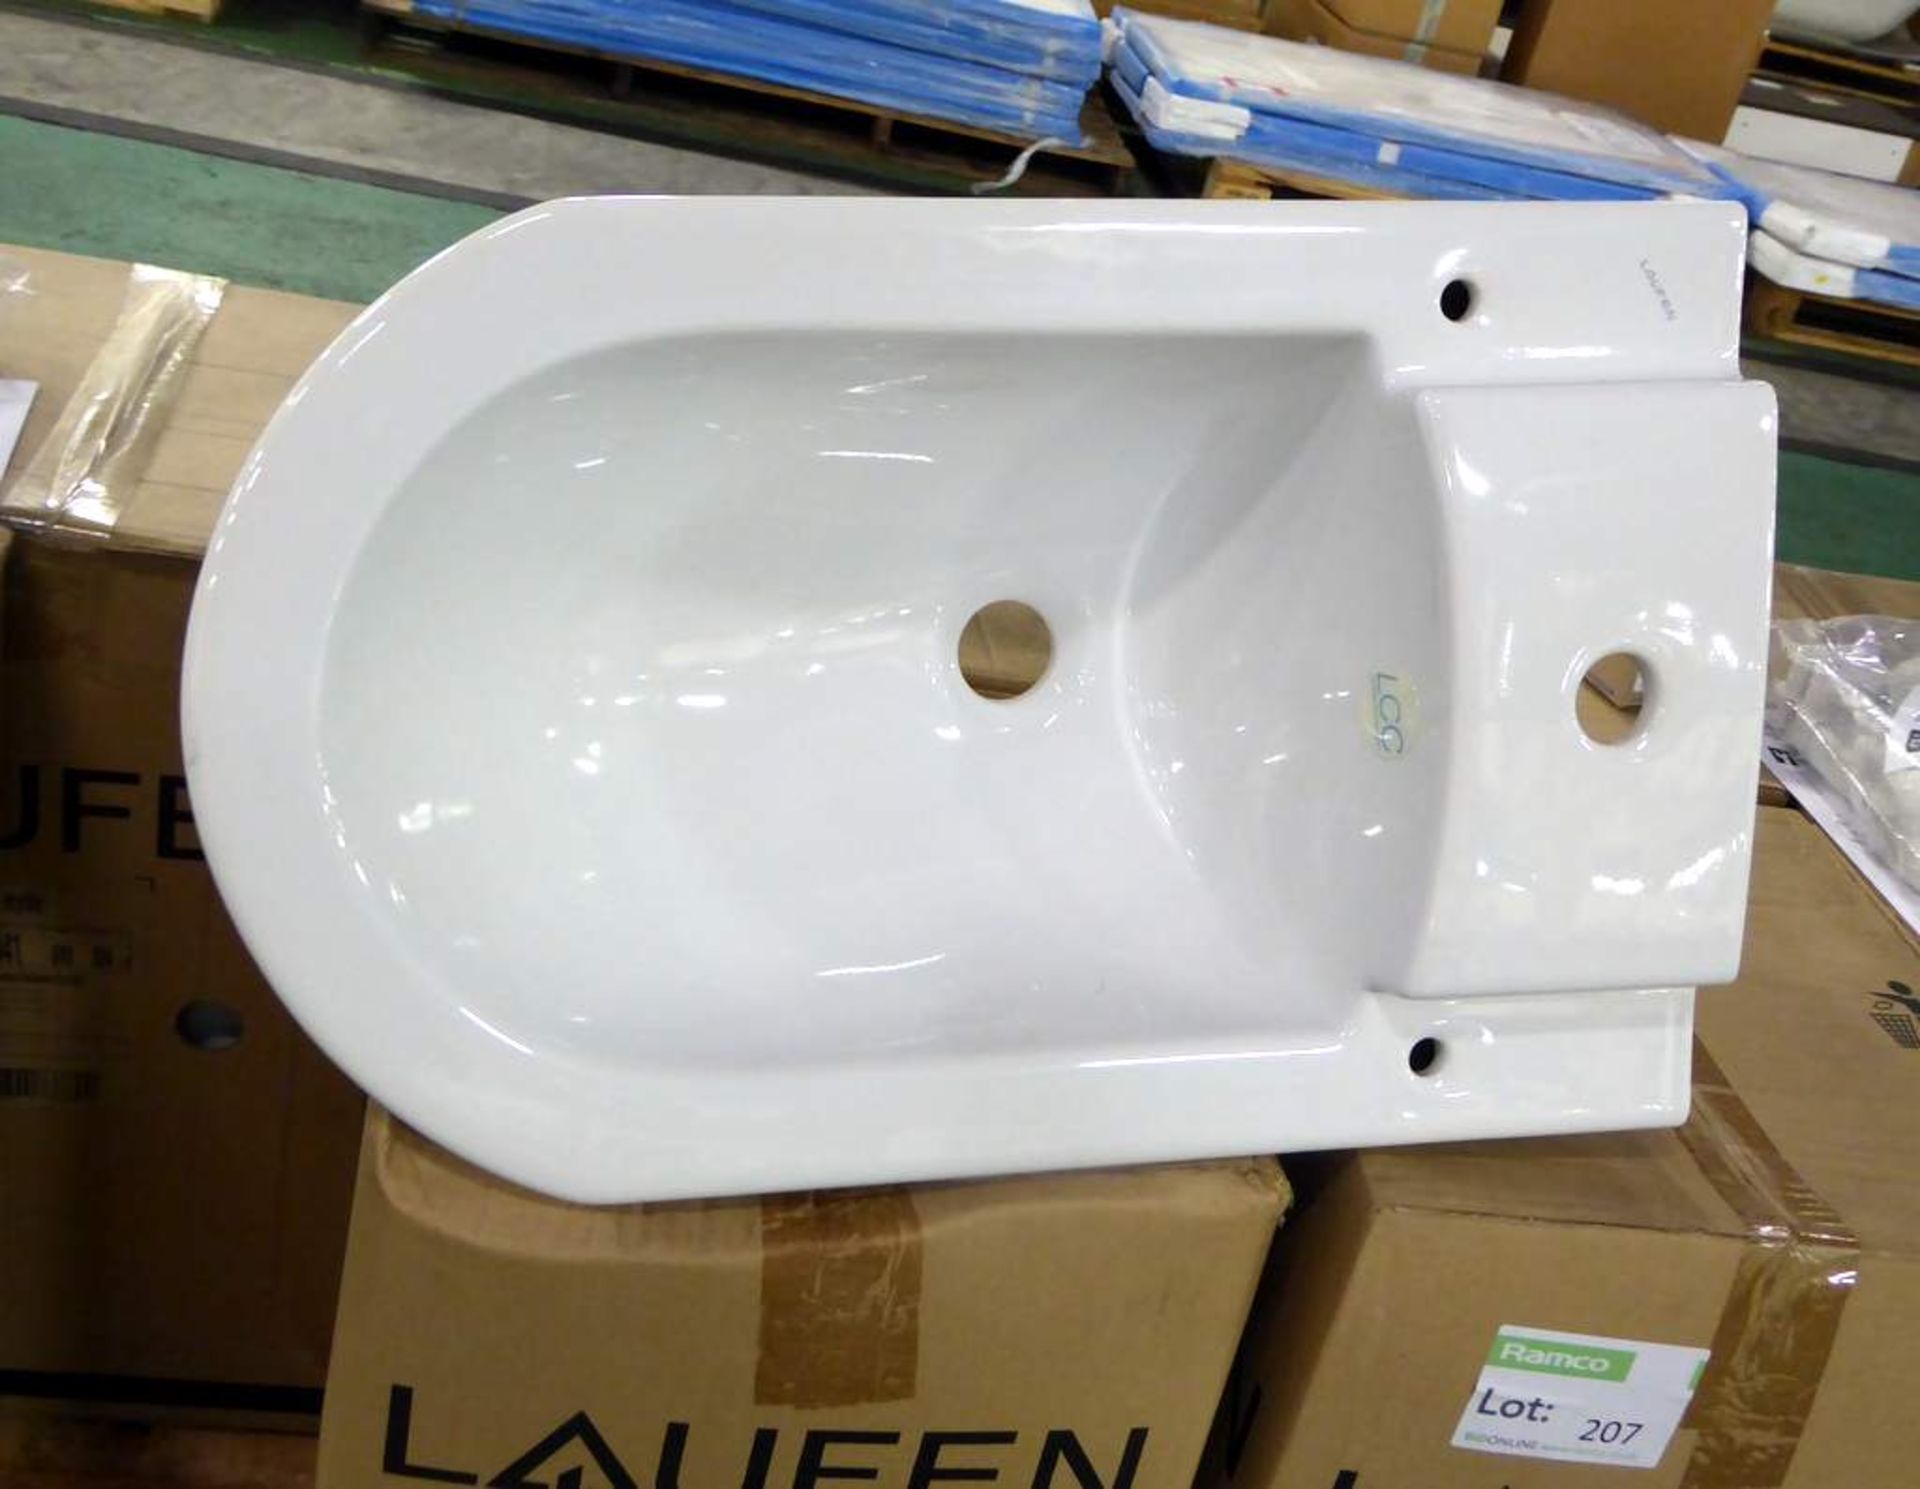 6x Laufen Mylife white toilet pan 62cm - Image 2 of 2